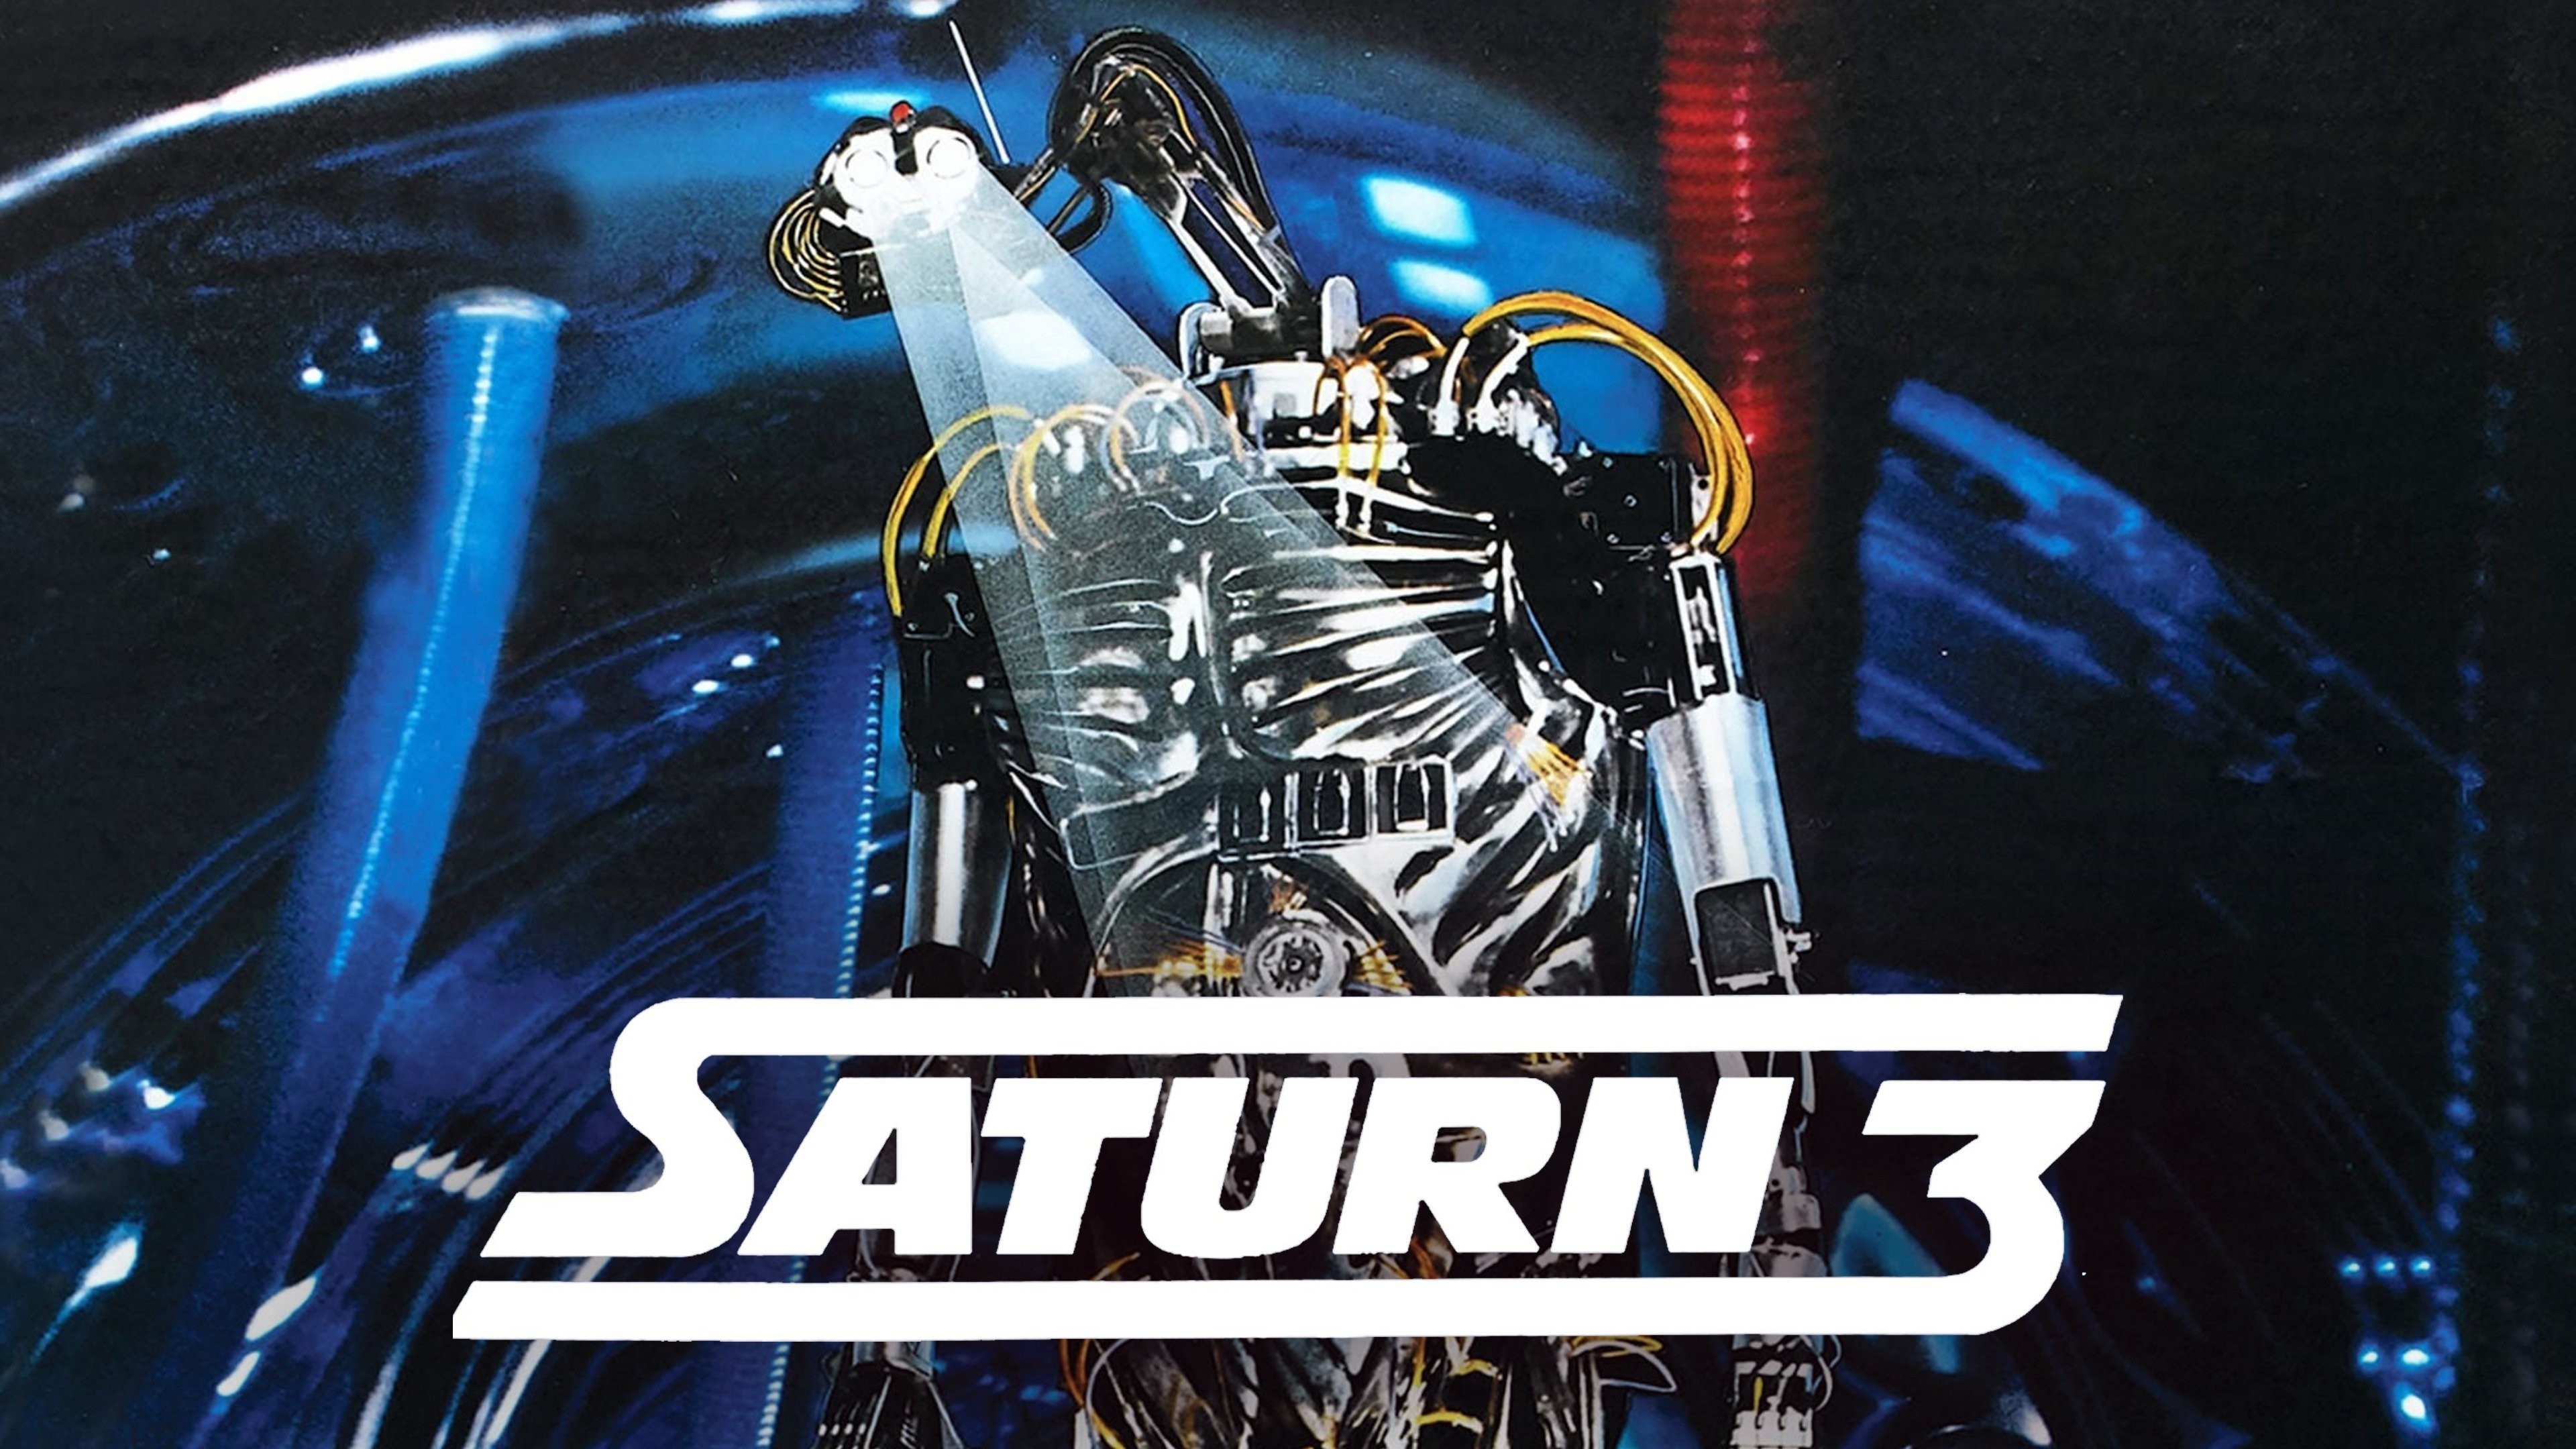 Saturn 3 Coming To Blu-Ray!